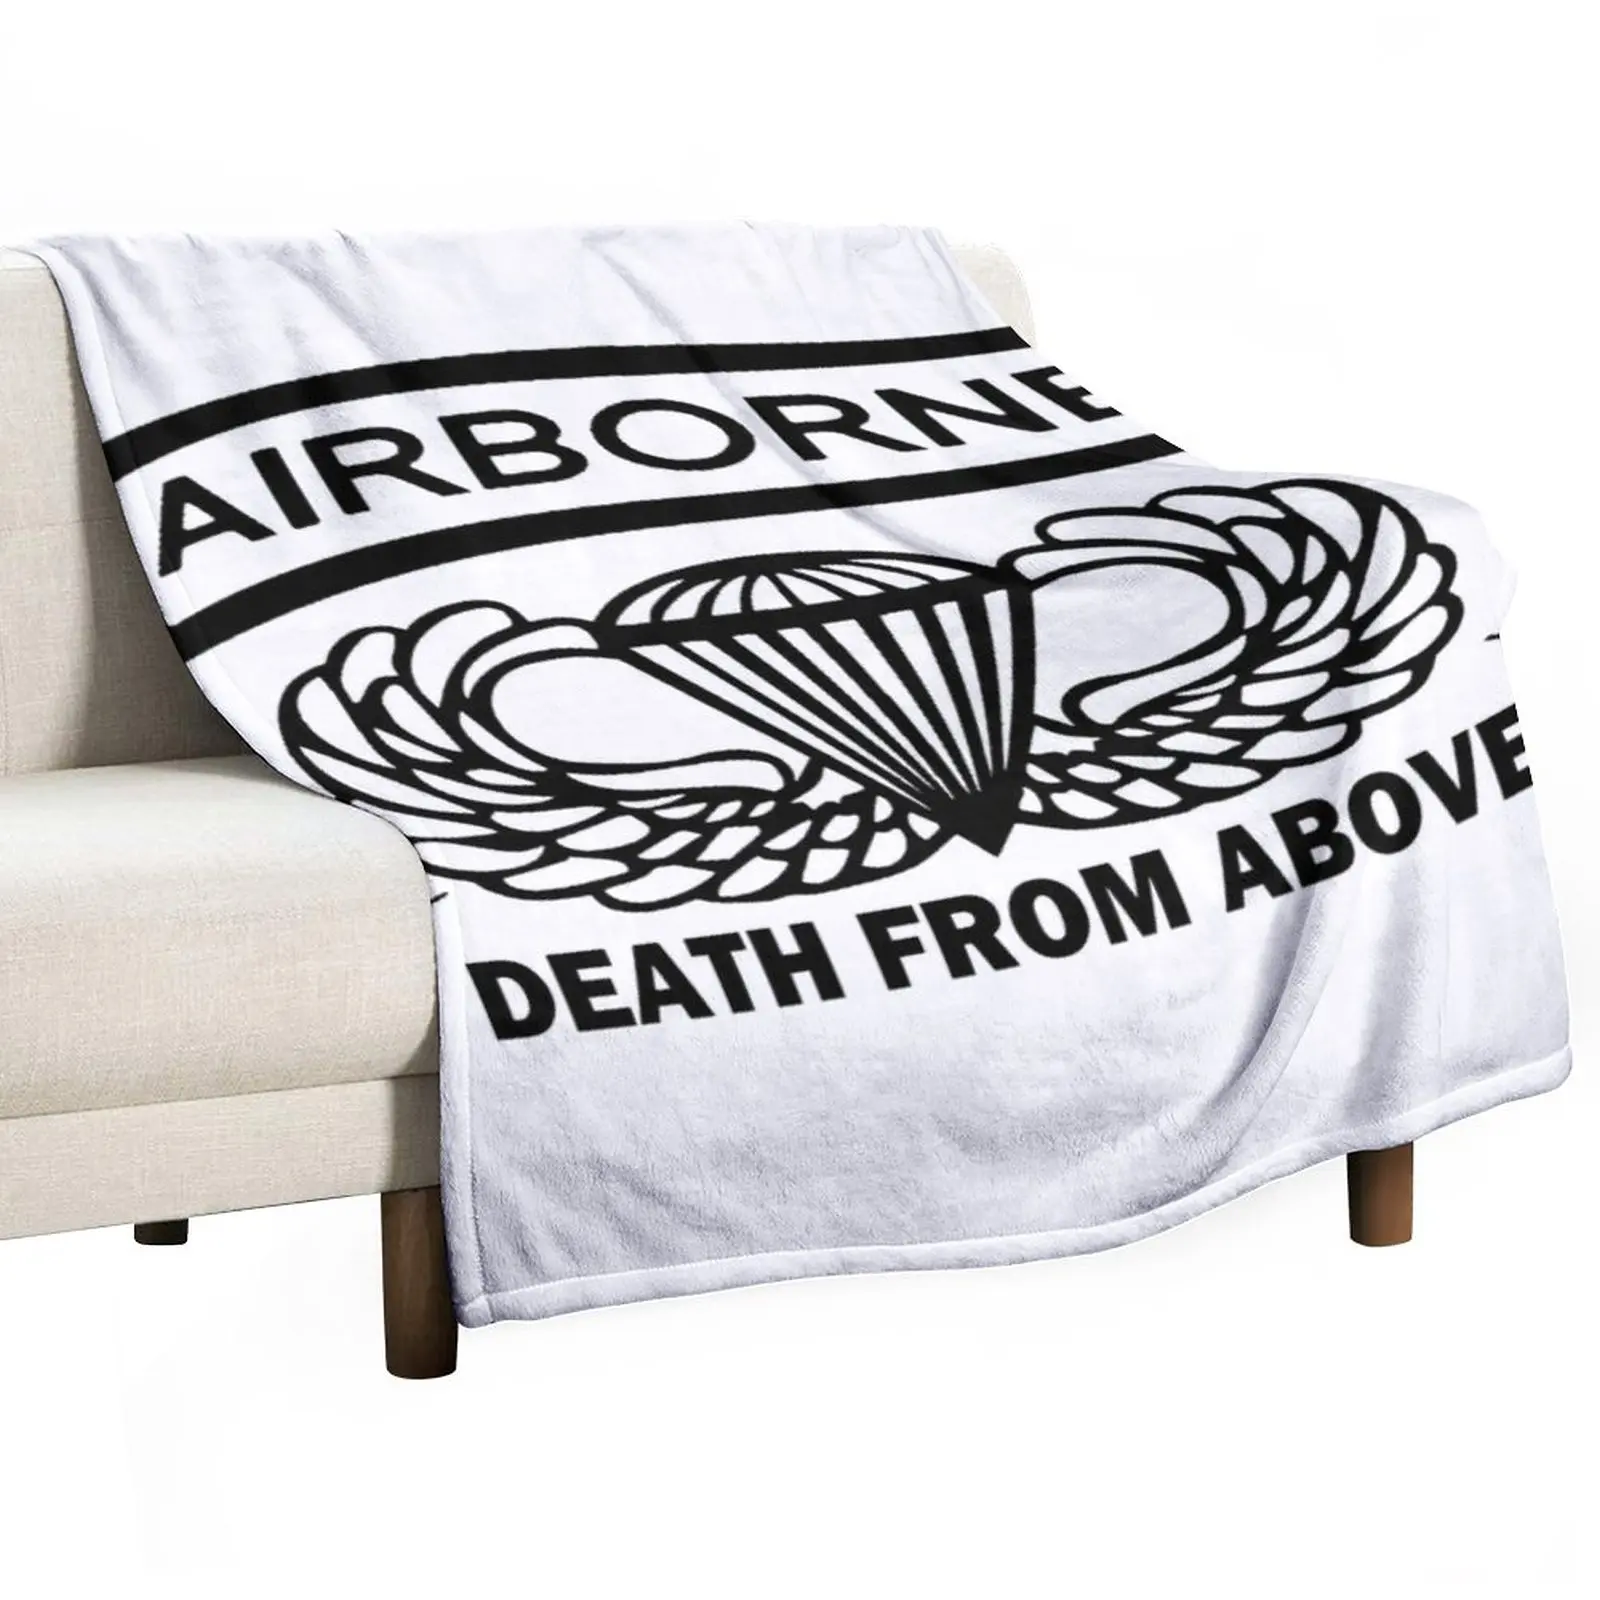 

Airborne Death From Above Throw Blanket Hairy Blanket Comforter Blanket